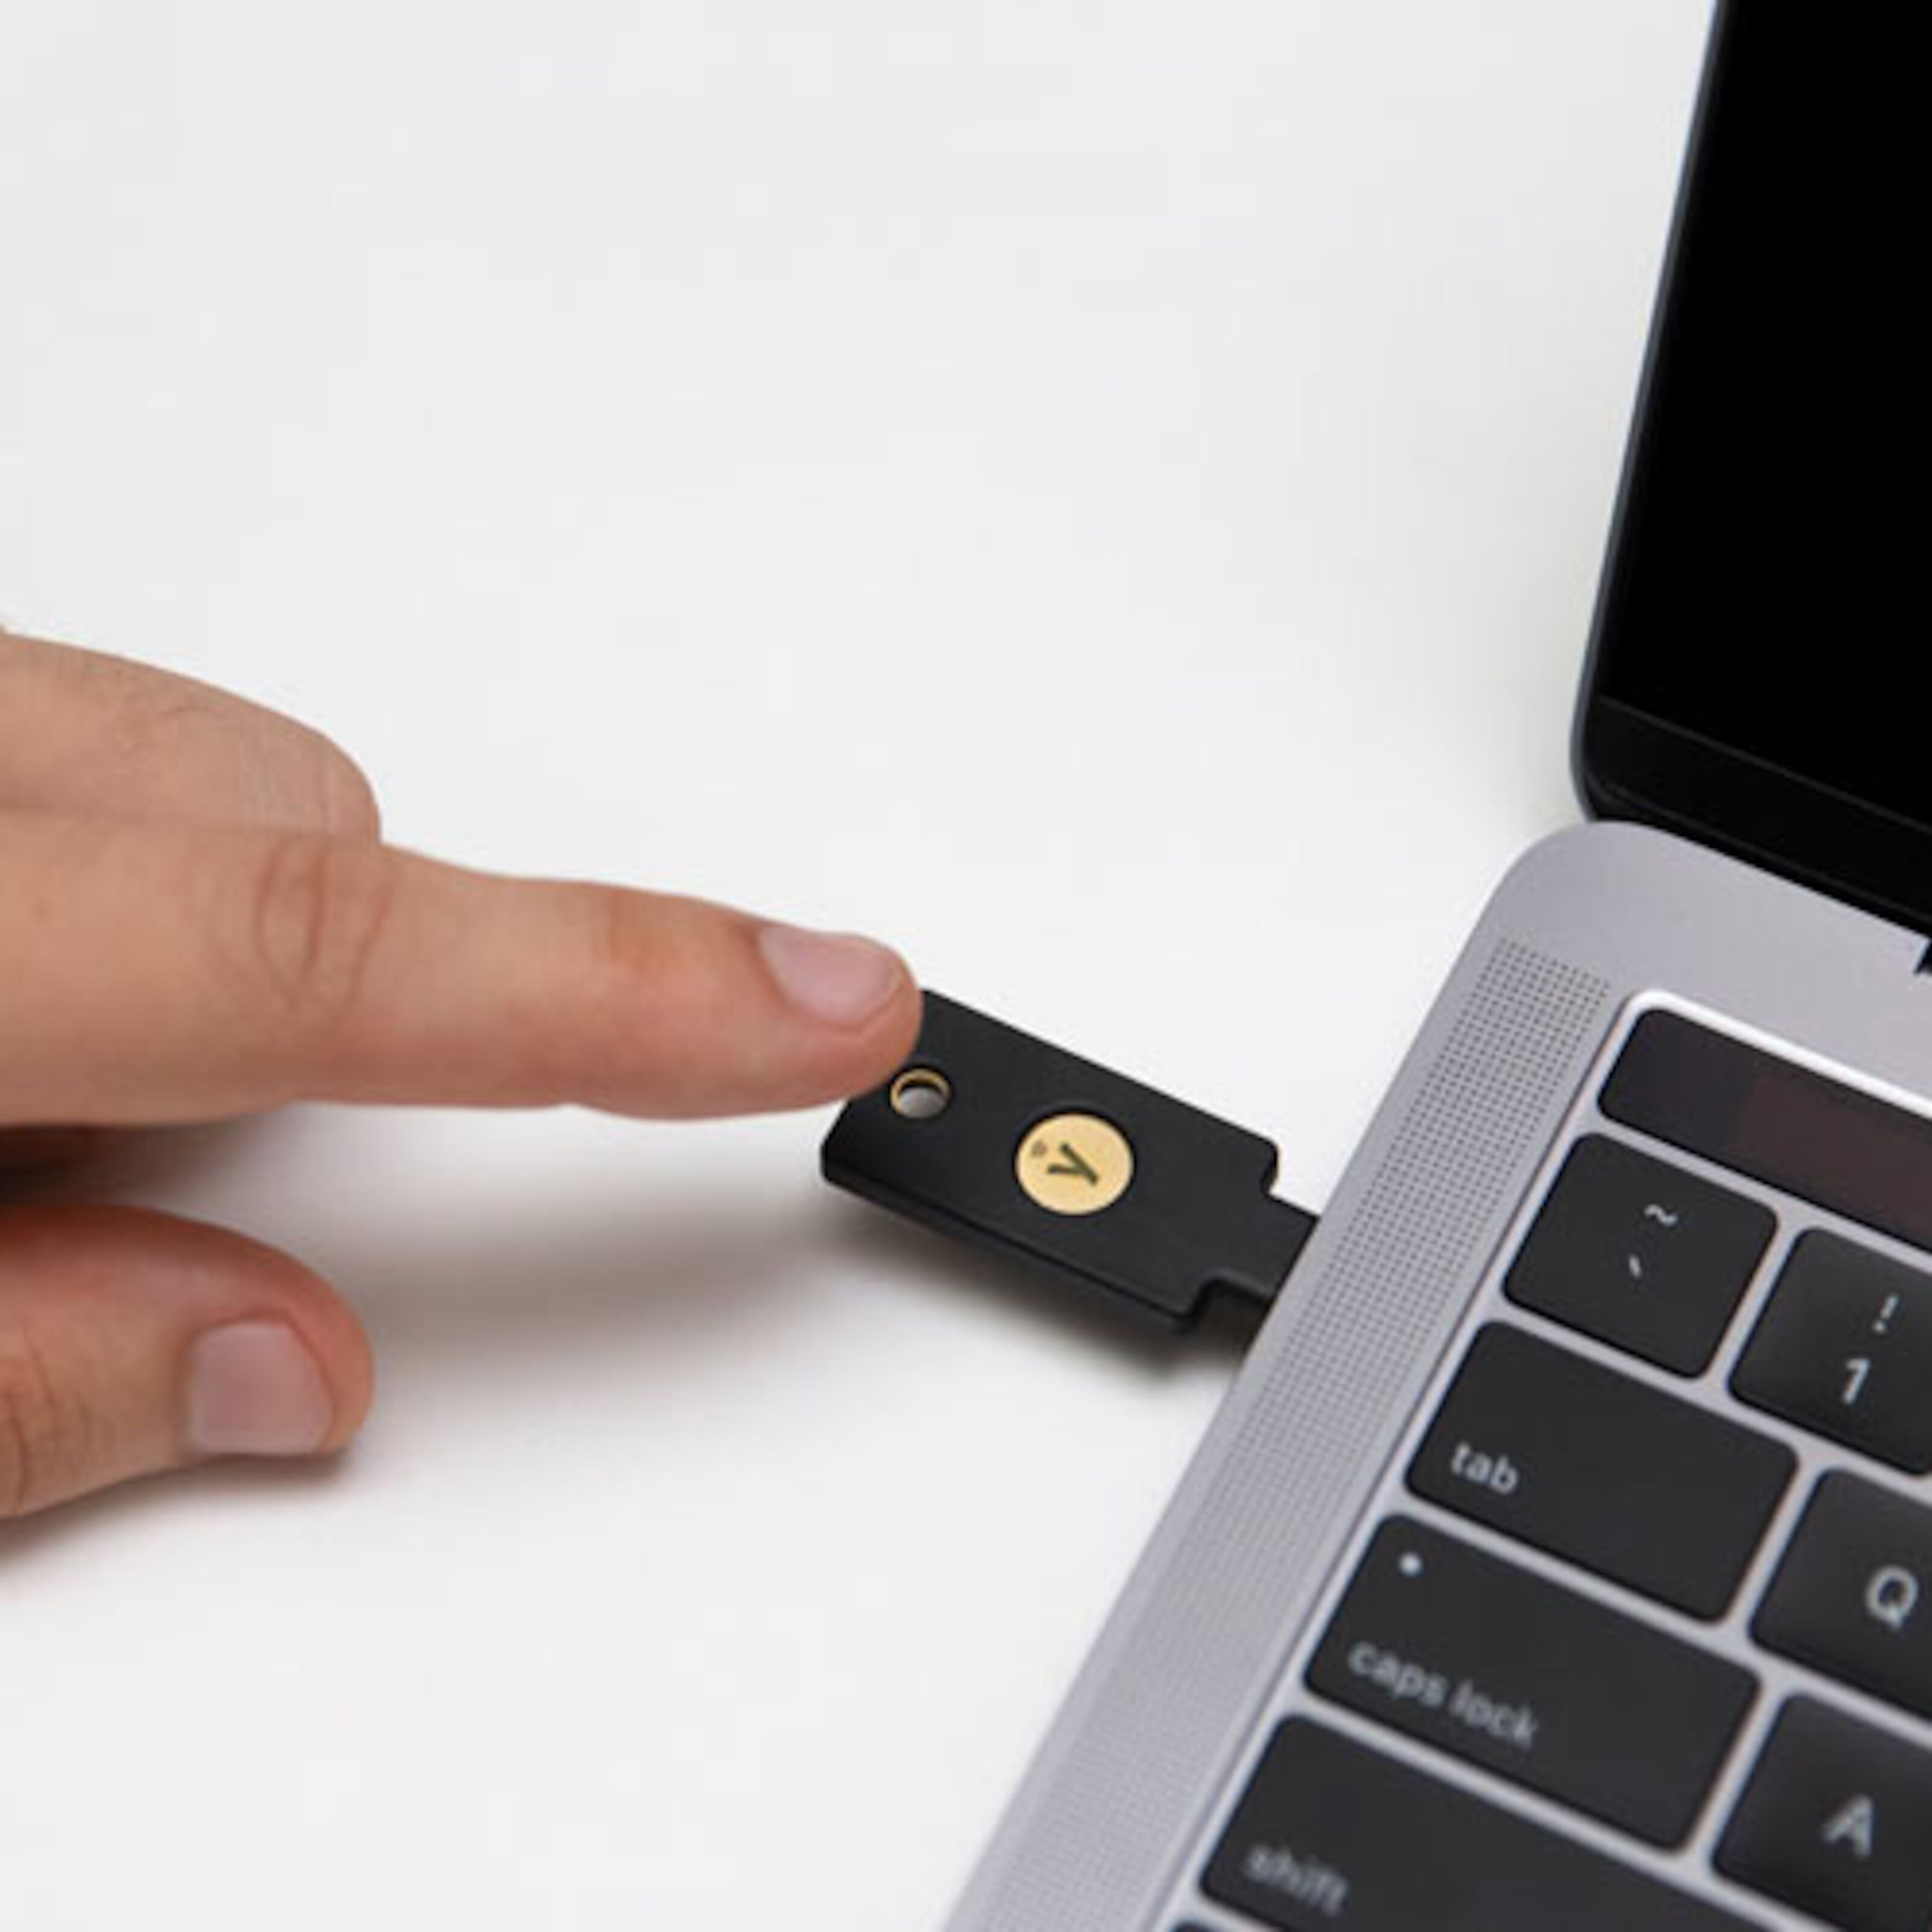 Yubico YubiKey 5C NFC - USB-C security key